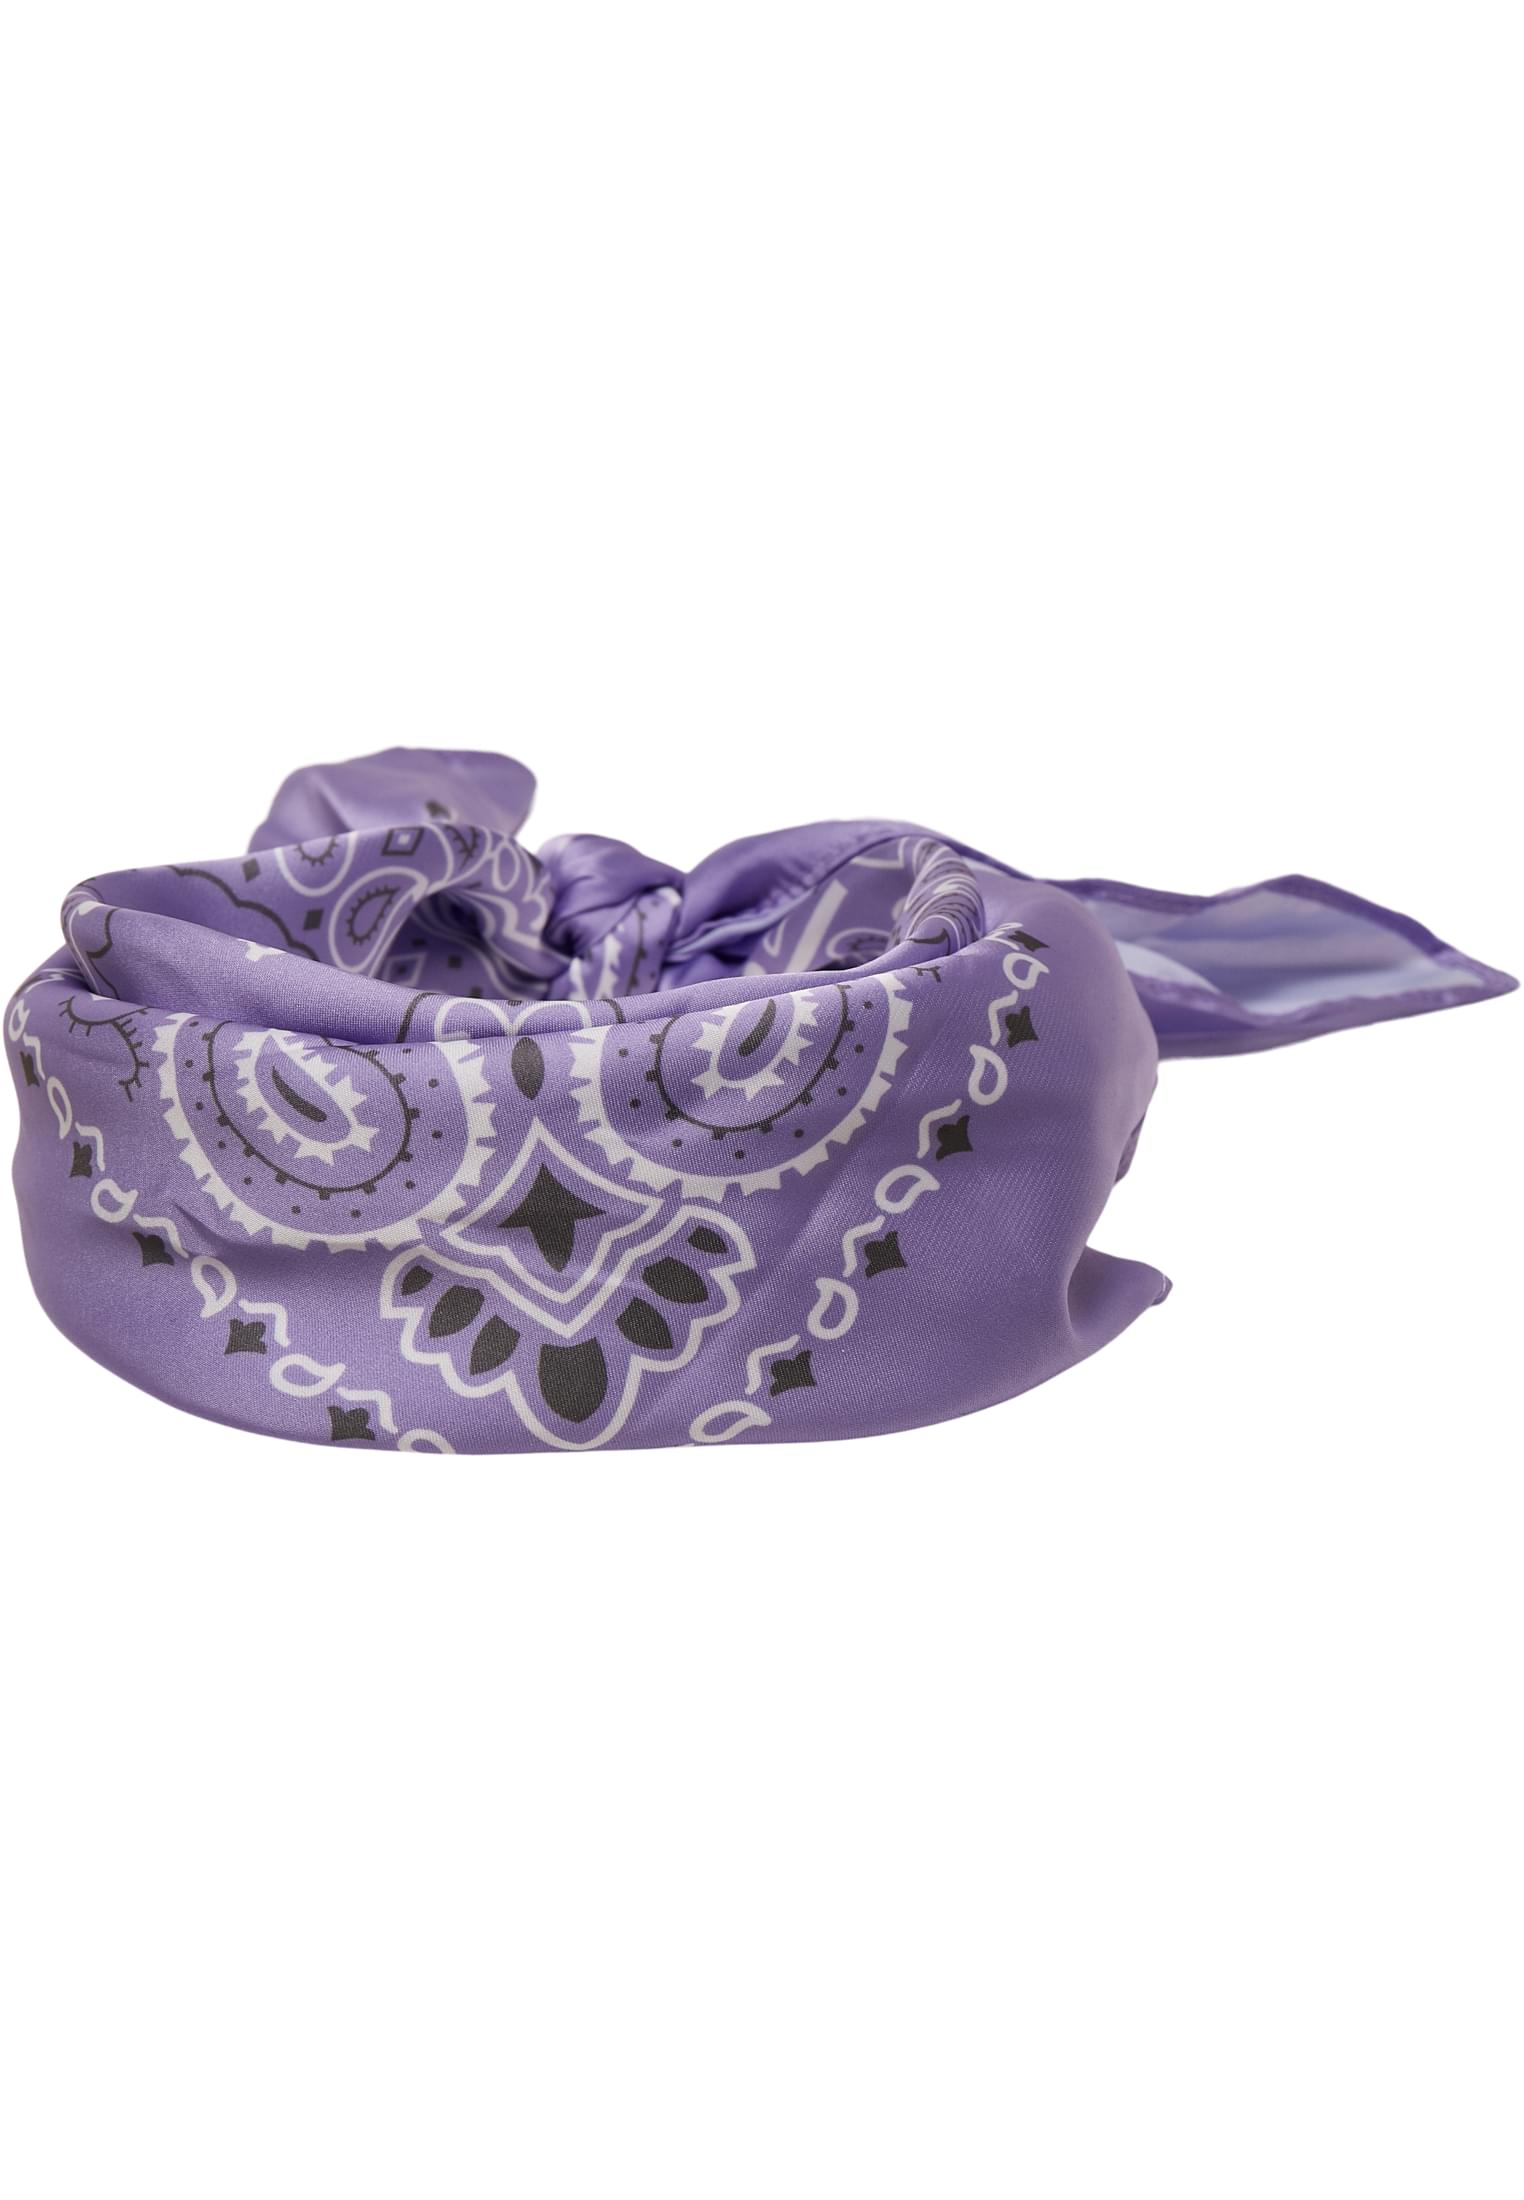 Masken Satin Bandana 2-Pack in Farbe lavender/asphalt